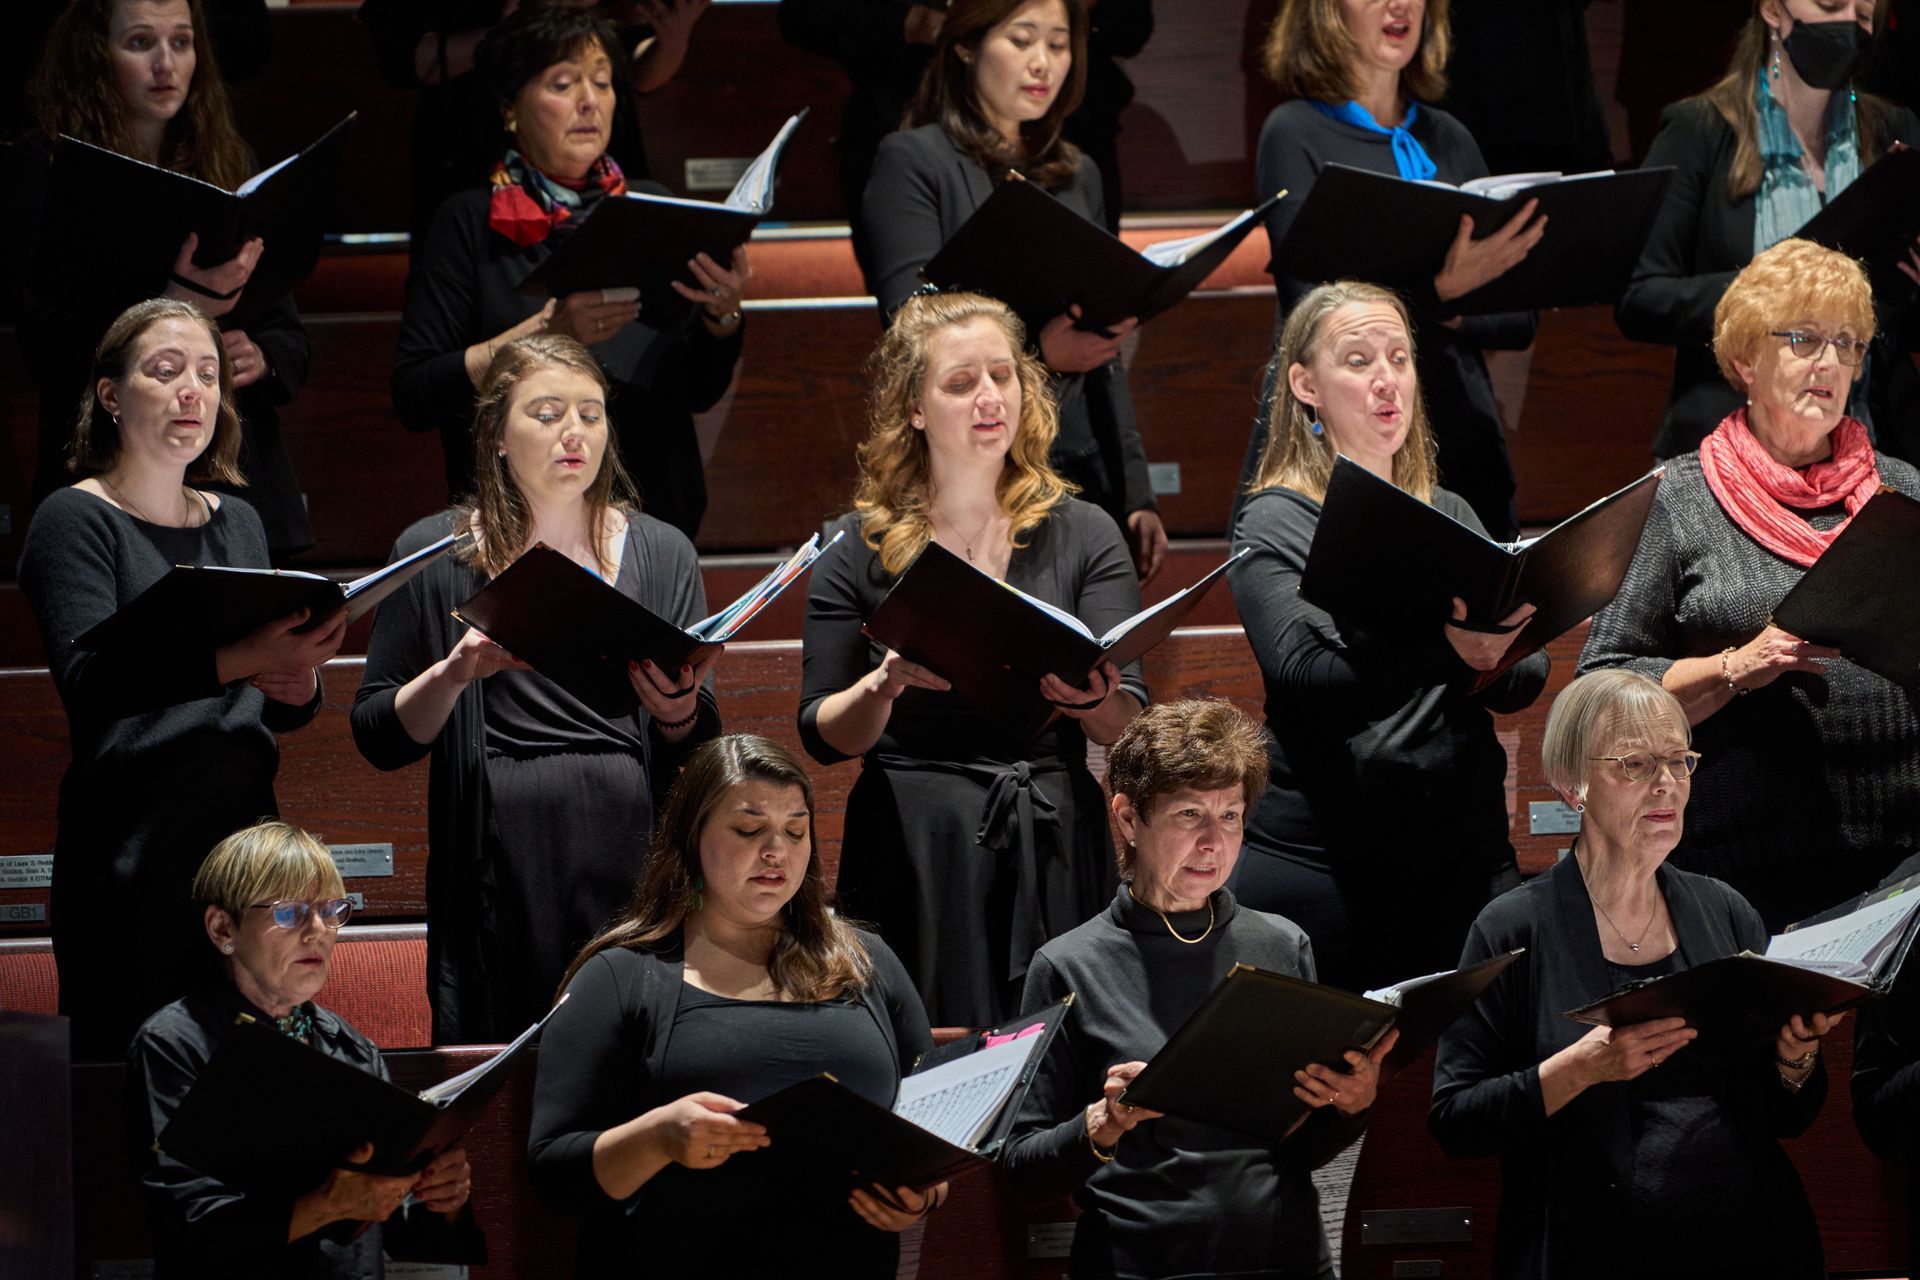 Mendelssohn Chorus sings at Temple University's Performing Arts Center